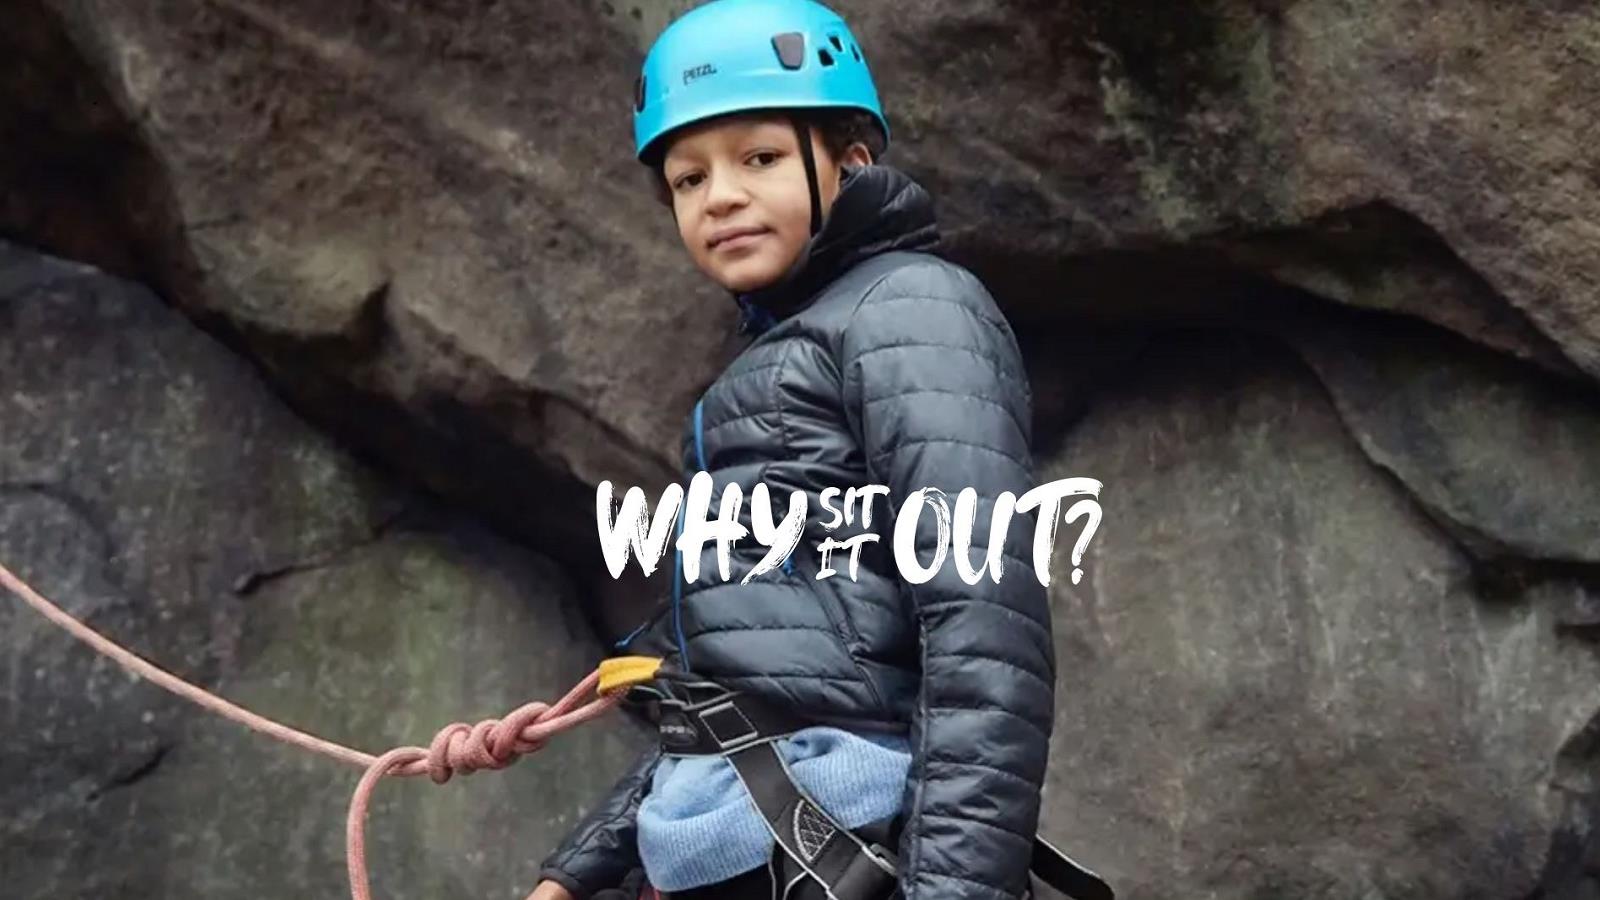 Boy in blue helmet climbing up rock face